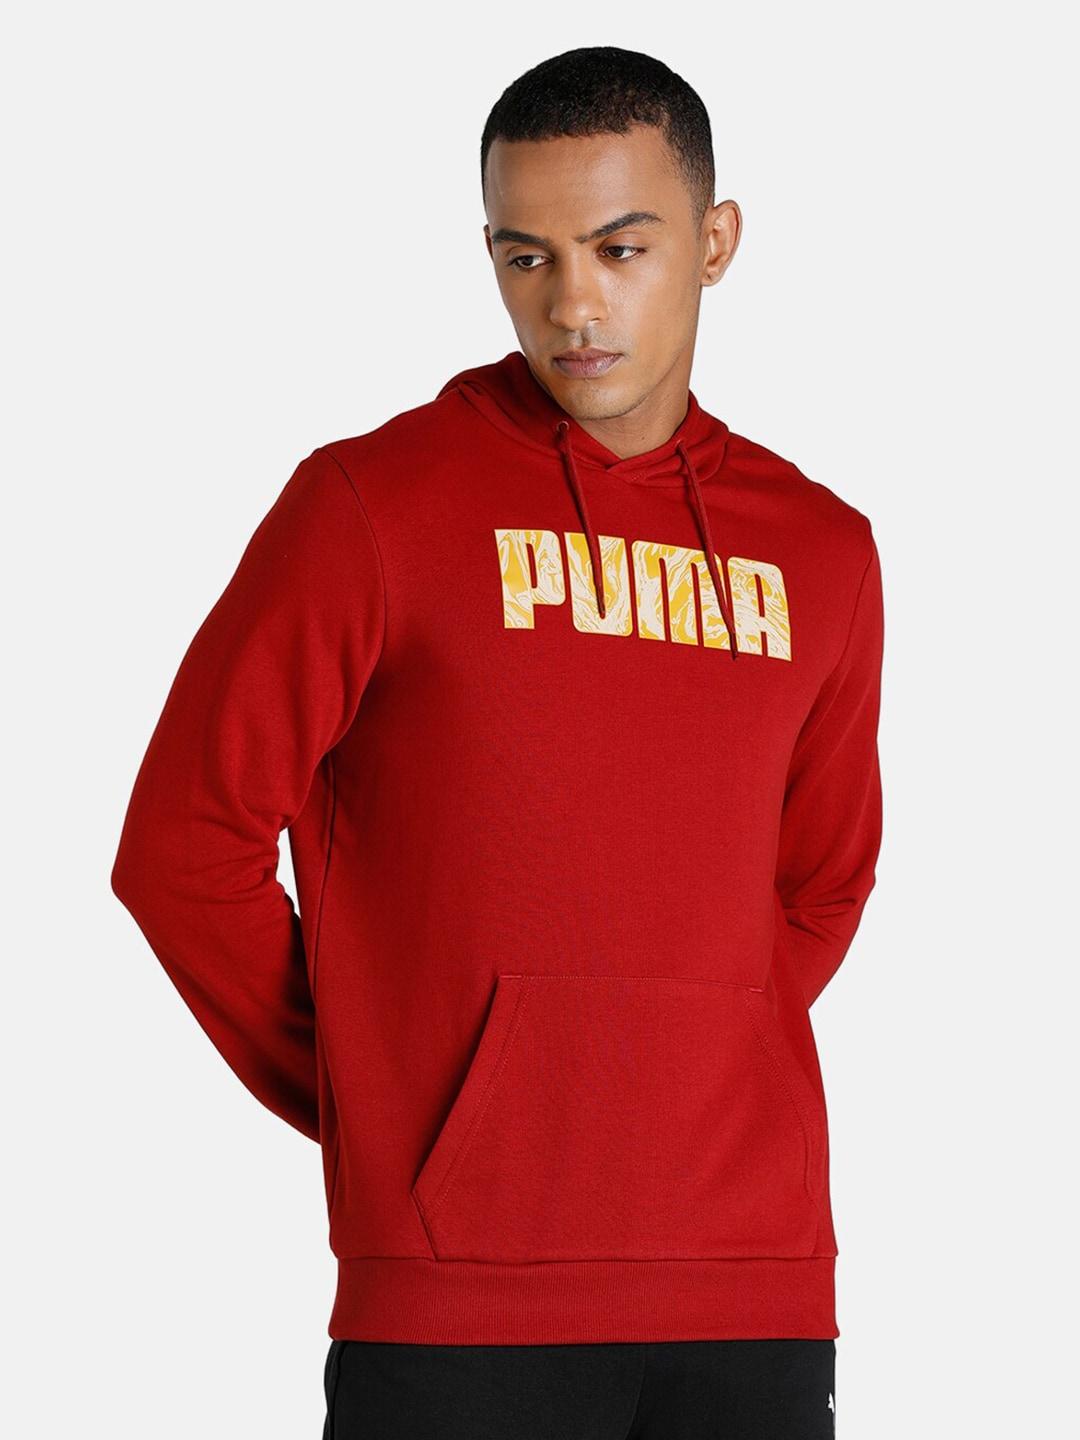 puma-men-red-puma-graphic-printed-hooded-sweatshirt